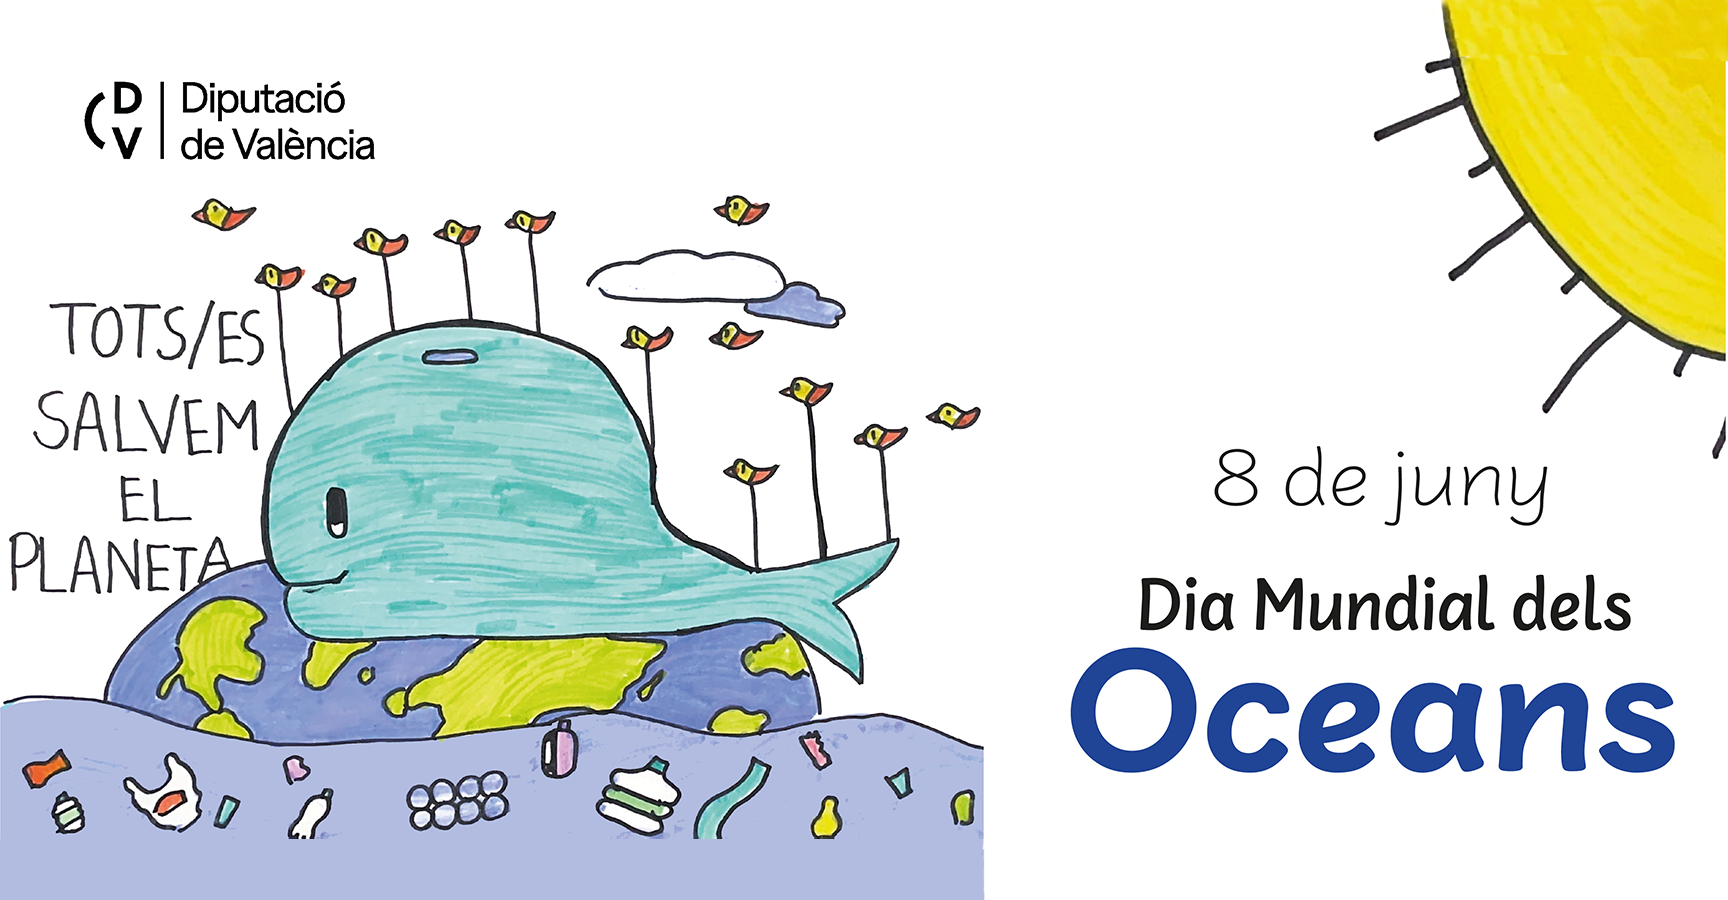 Dia Mundial dels oceans